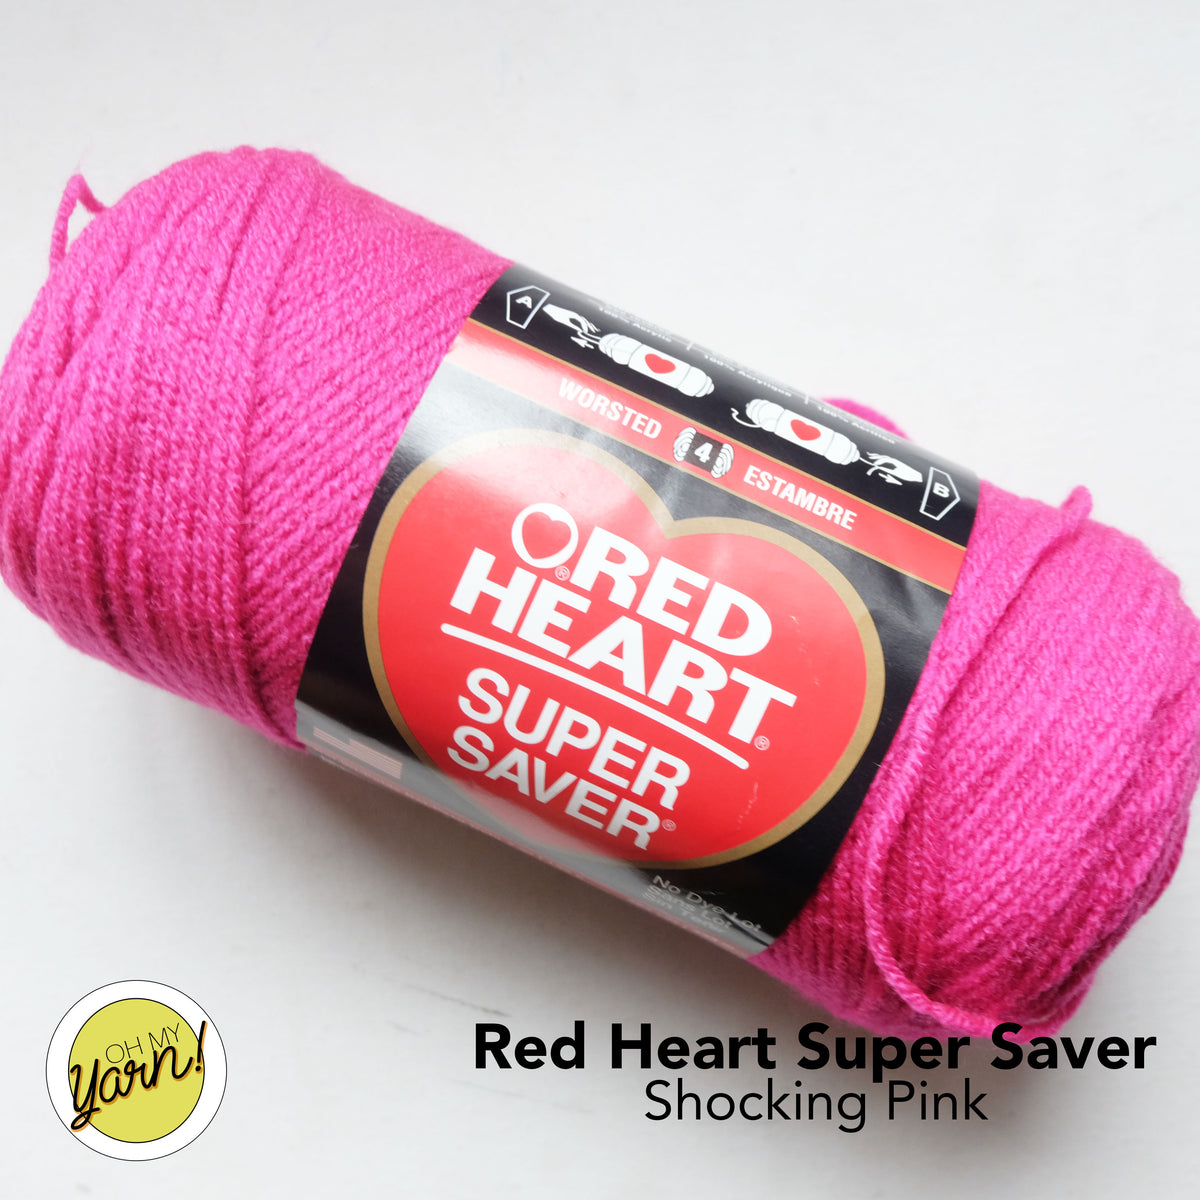 Red Heart Super Saver Shocking Pink